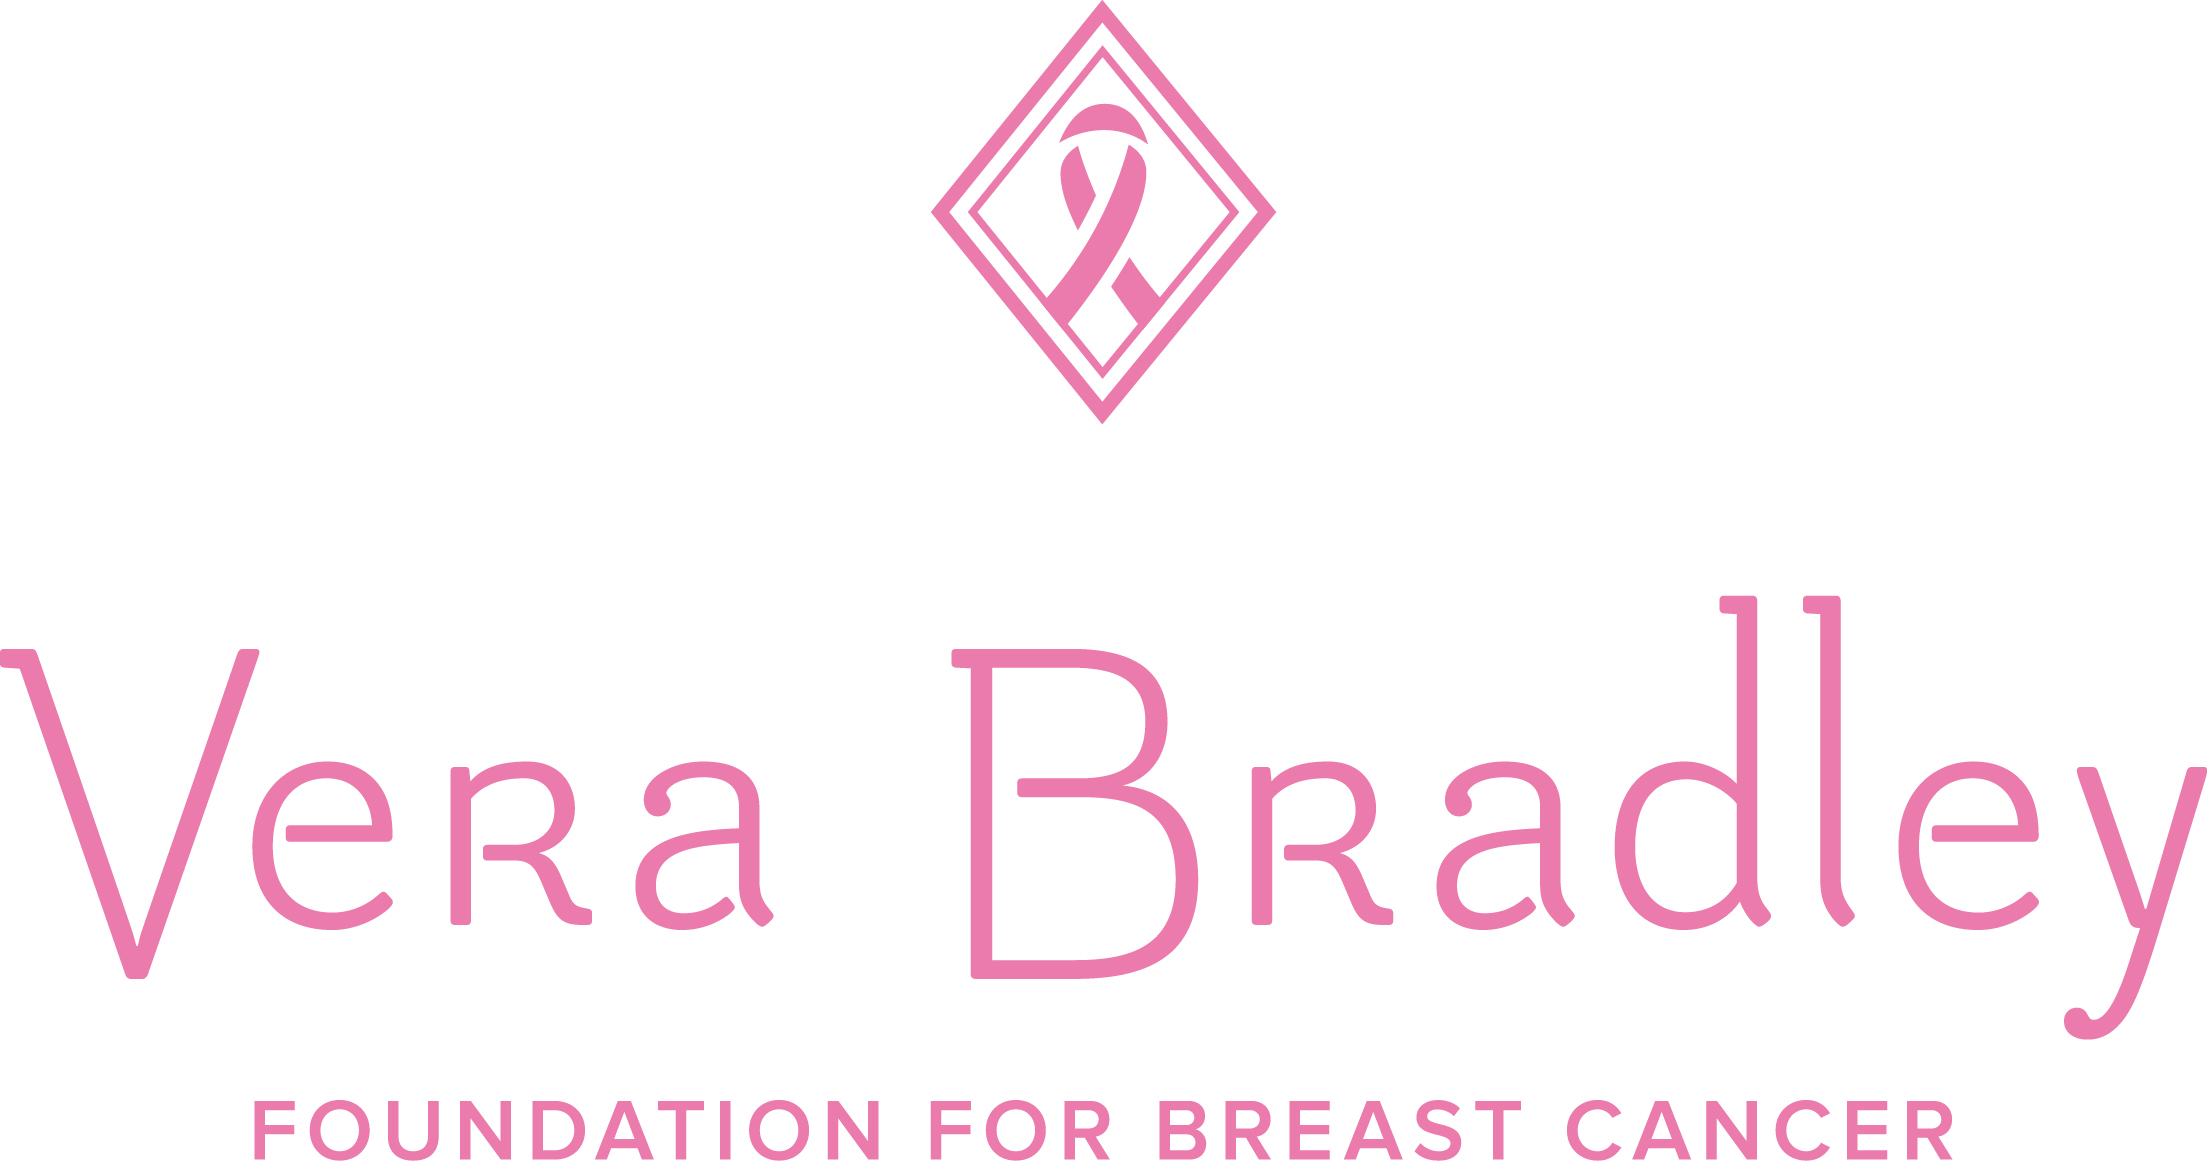 Vera Bradley Foundation for Breast Cancer Logo